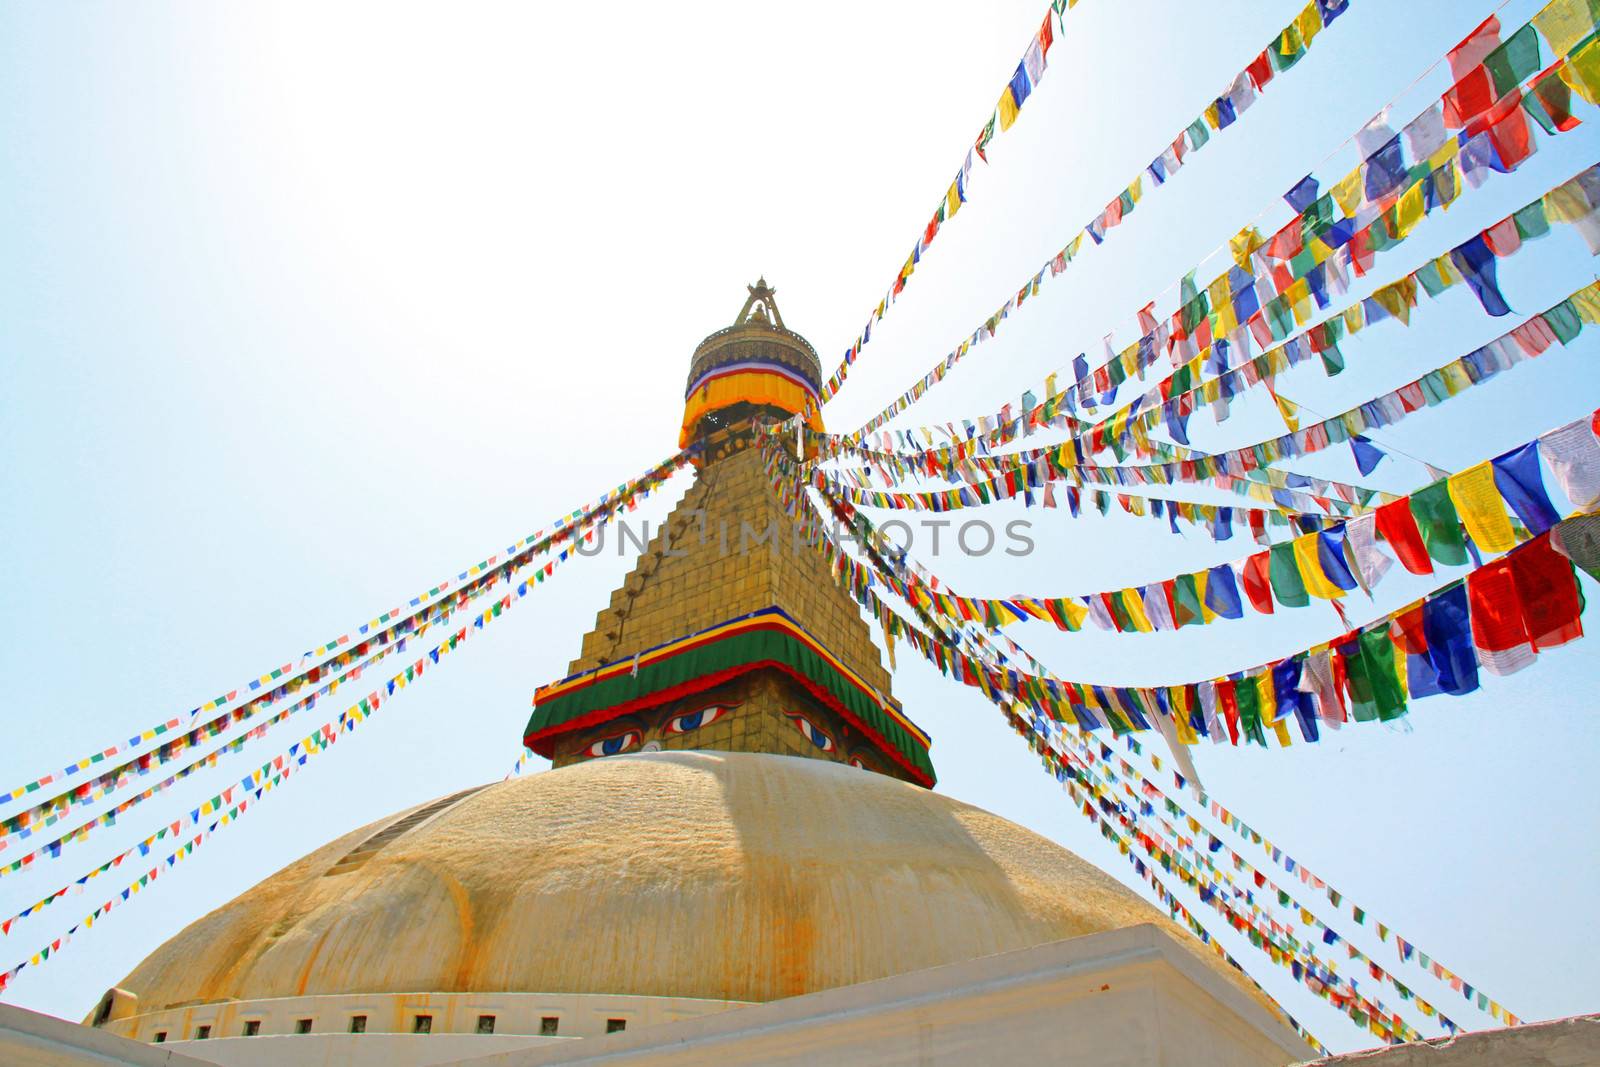 Stupa of the swayambhunath temple in kathmandu, Nepal  by nuchylee